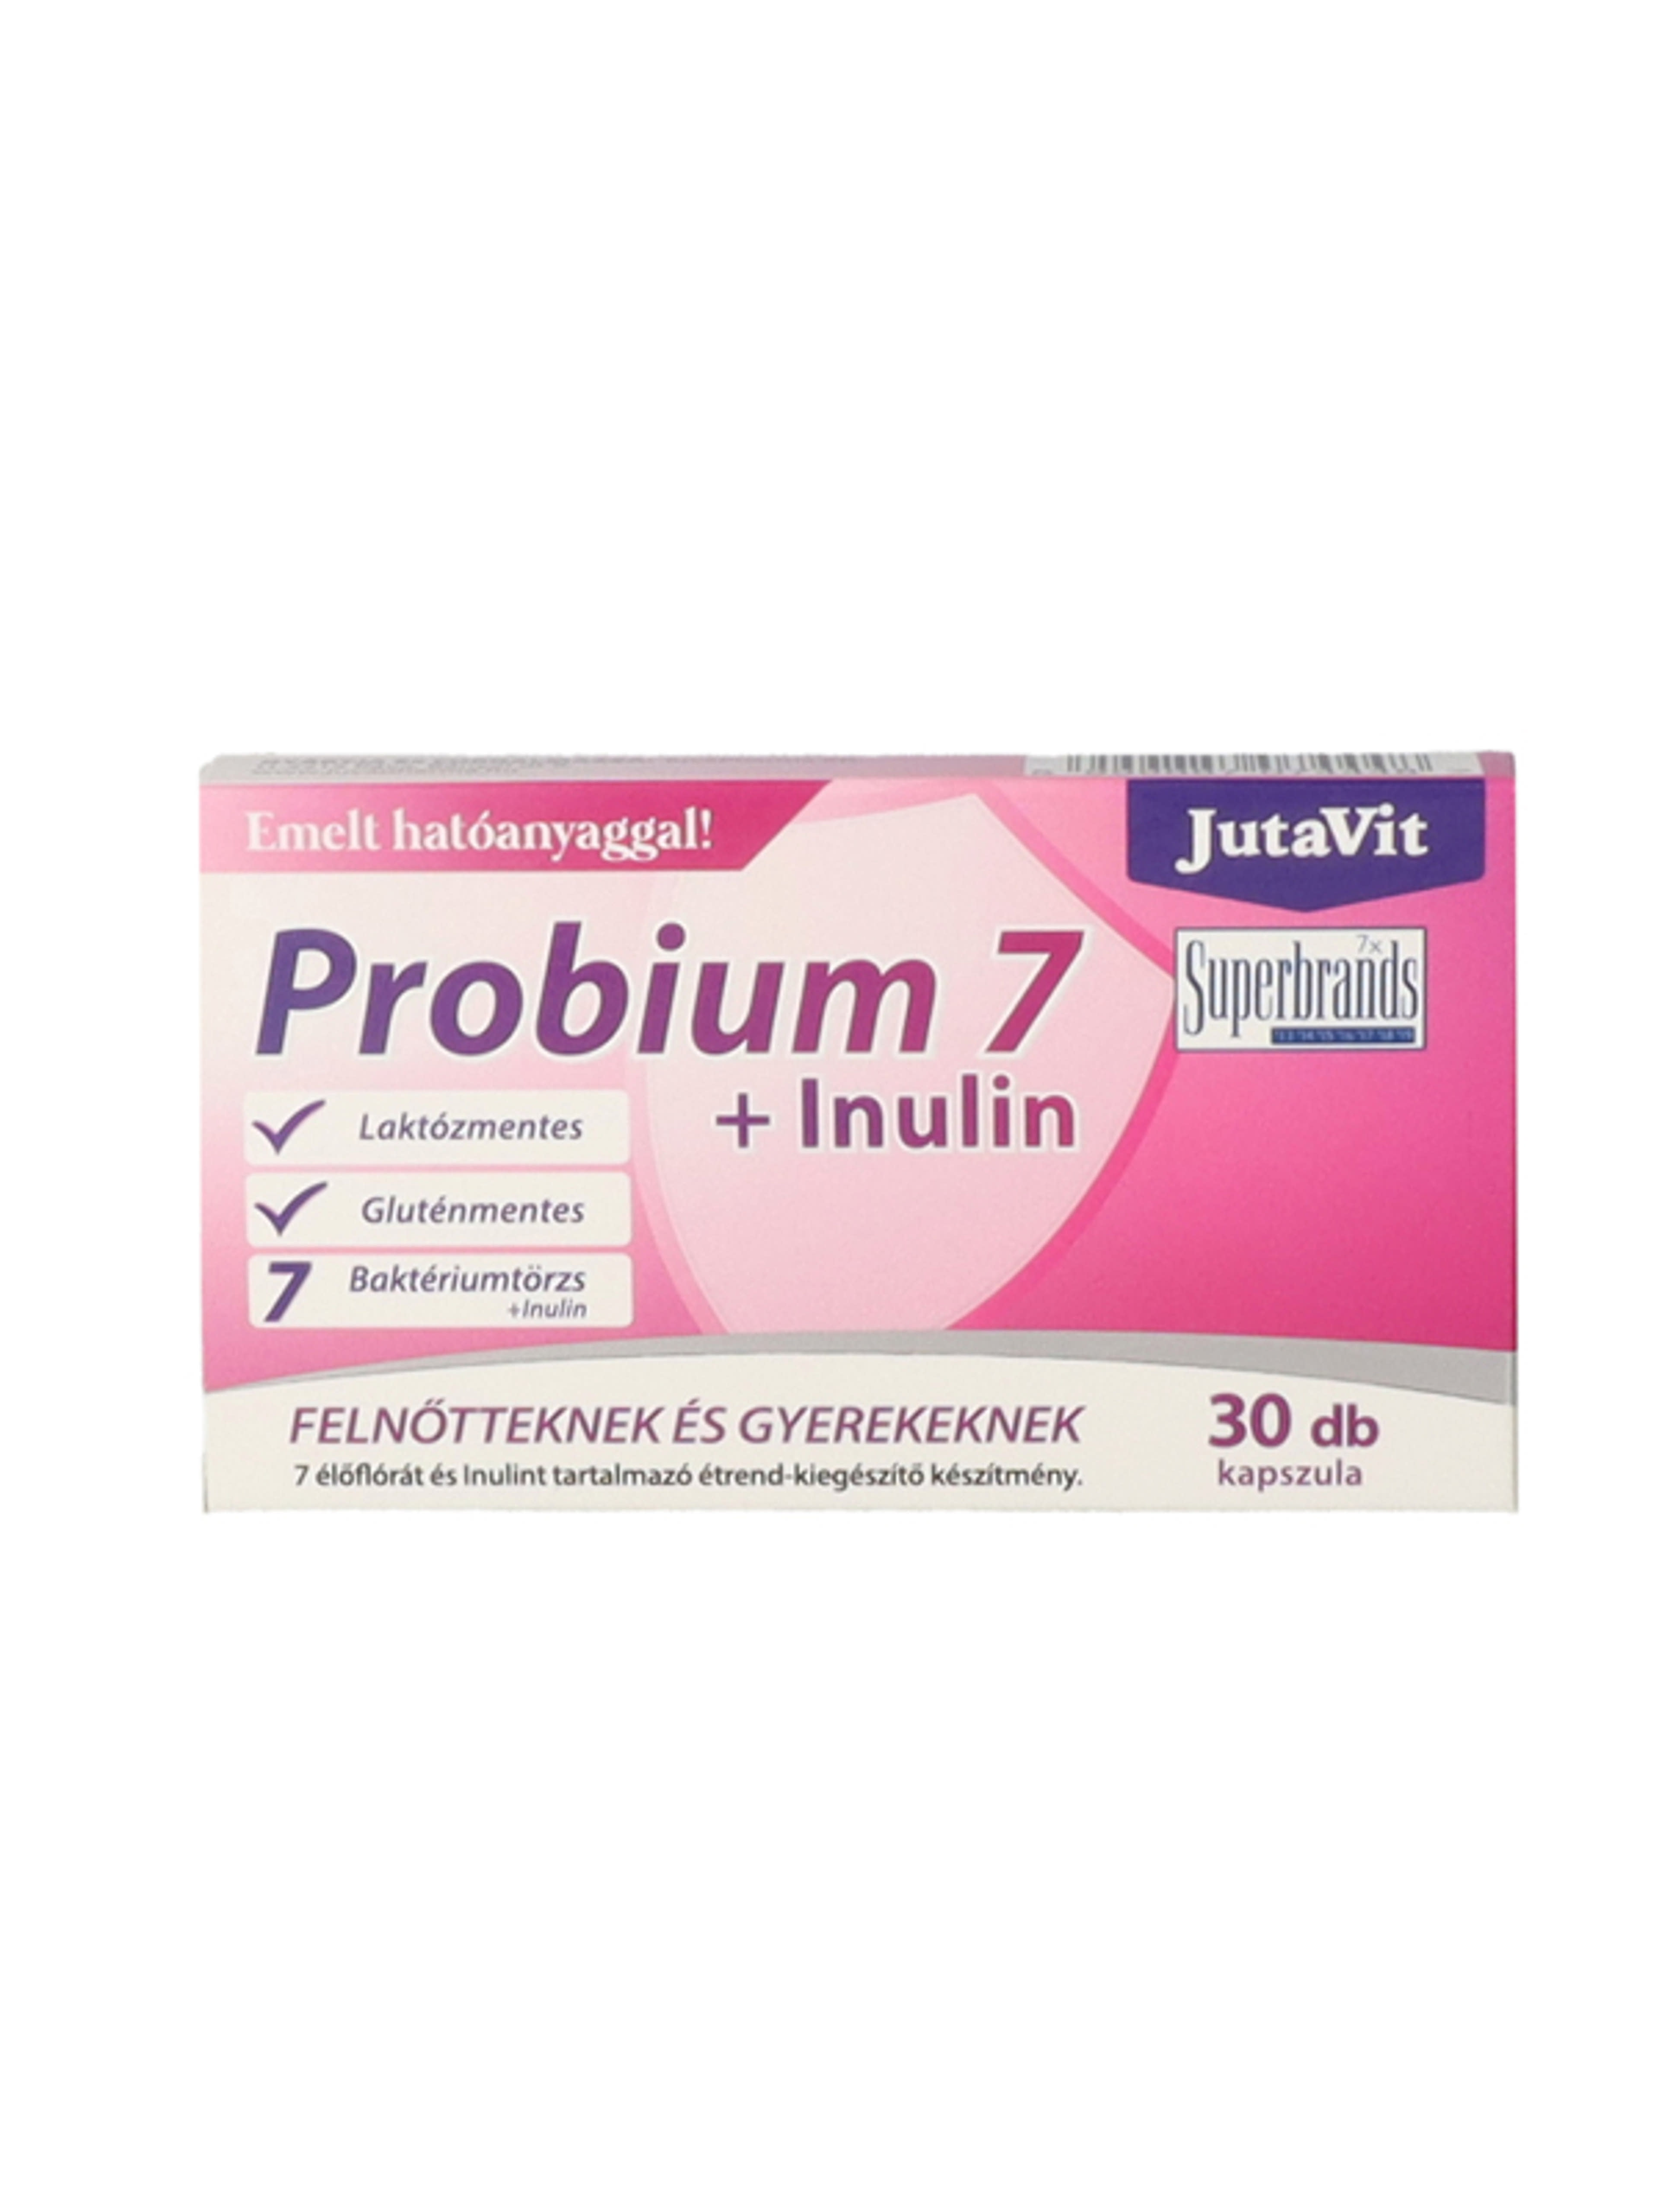 Jutavit probium7+inulin kapszula - 30 db